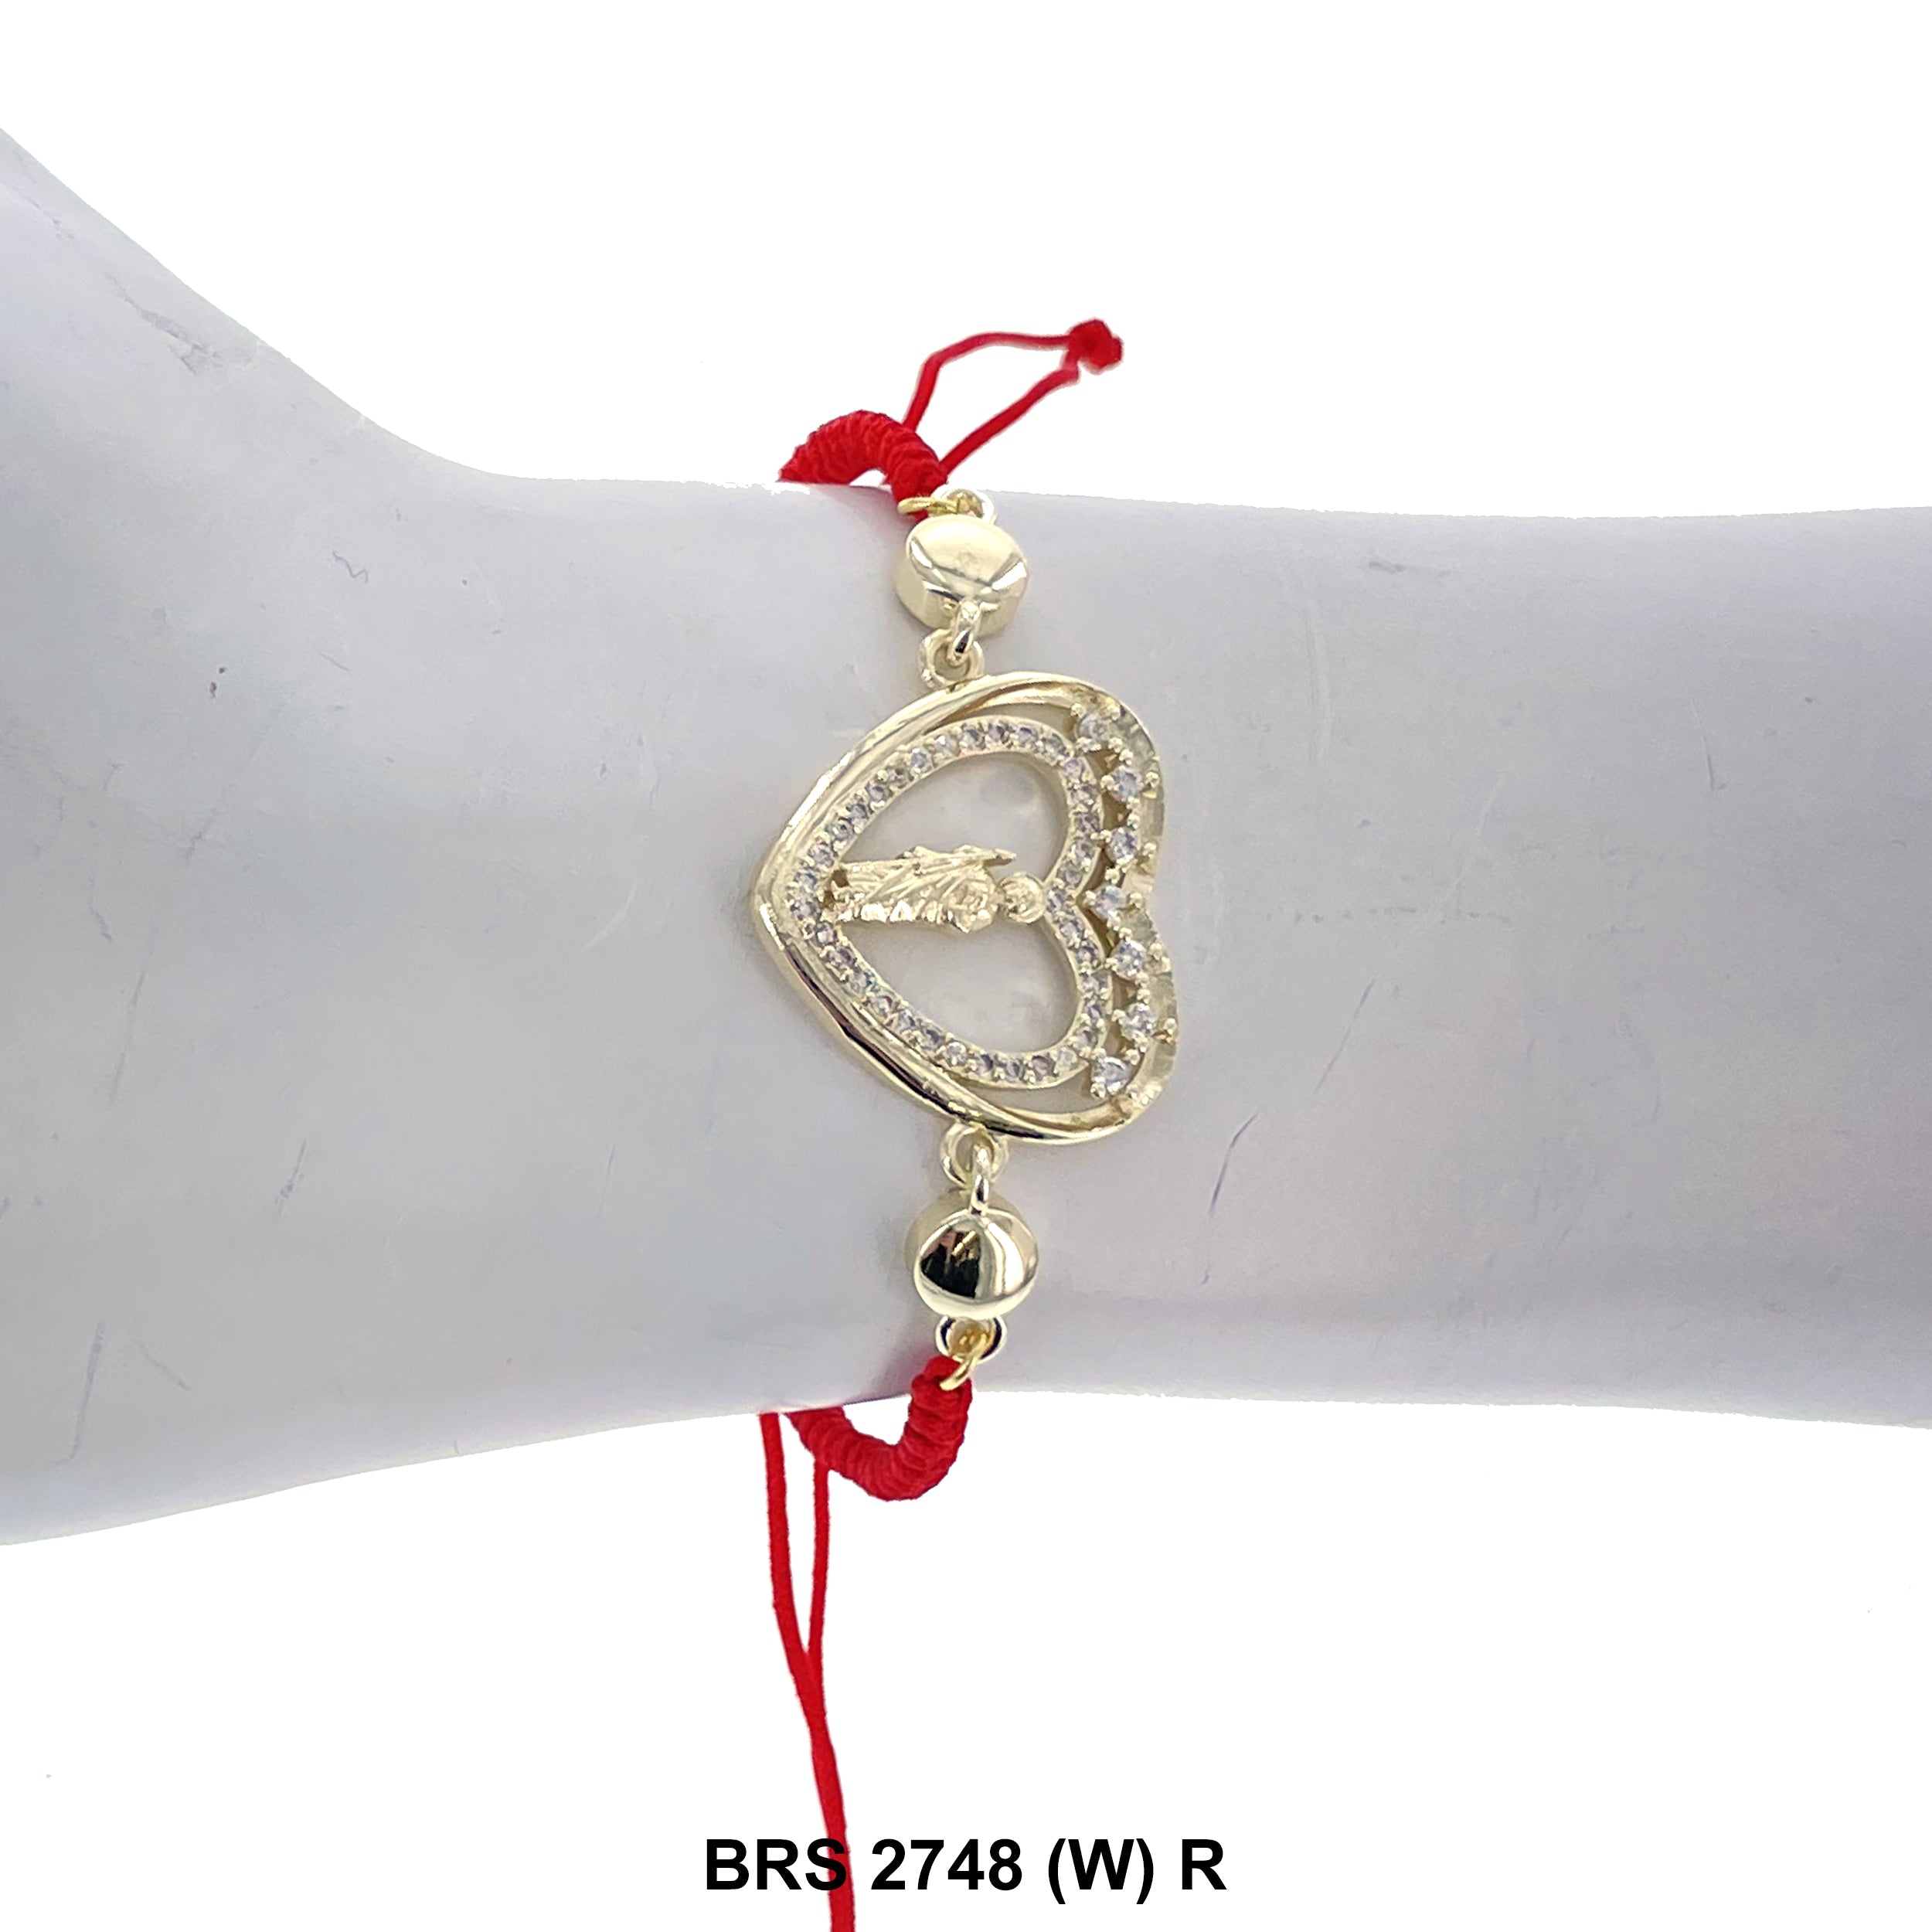 San Judas Thread Bracelets BRS 2748 (W) R